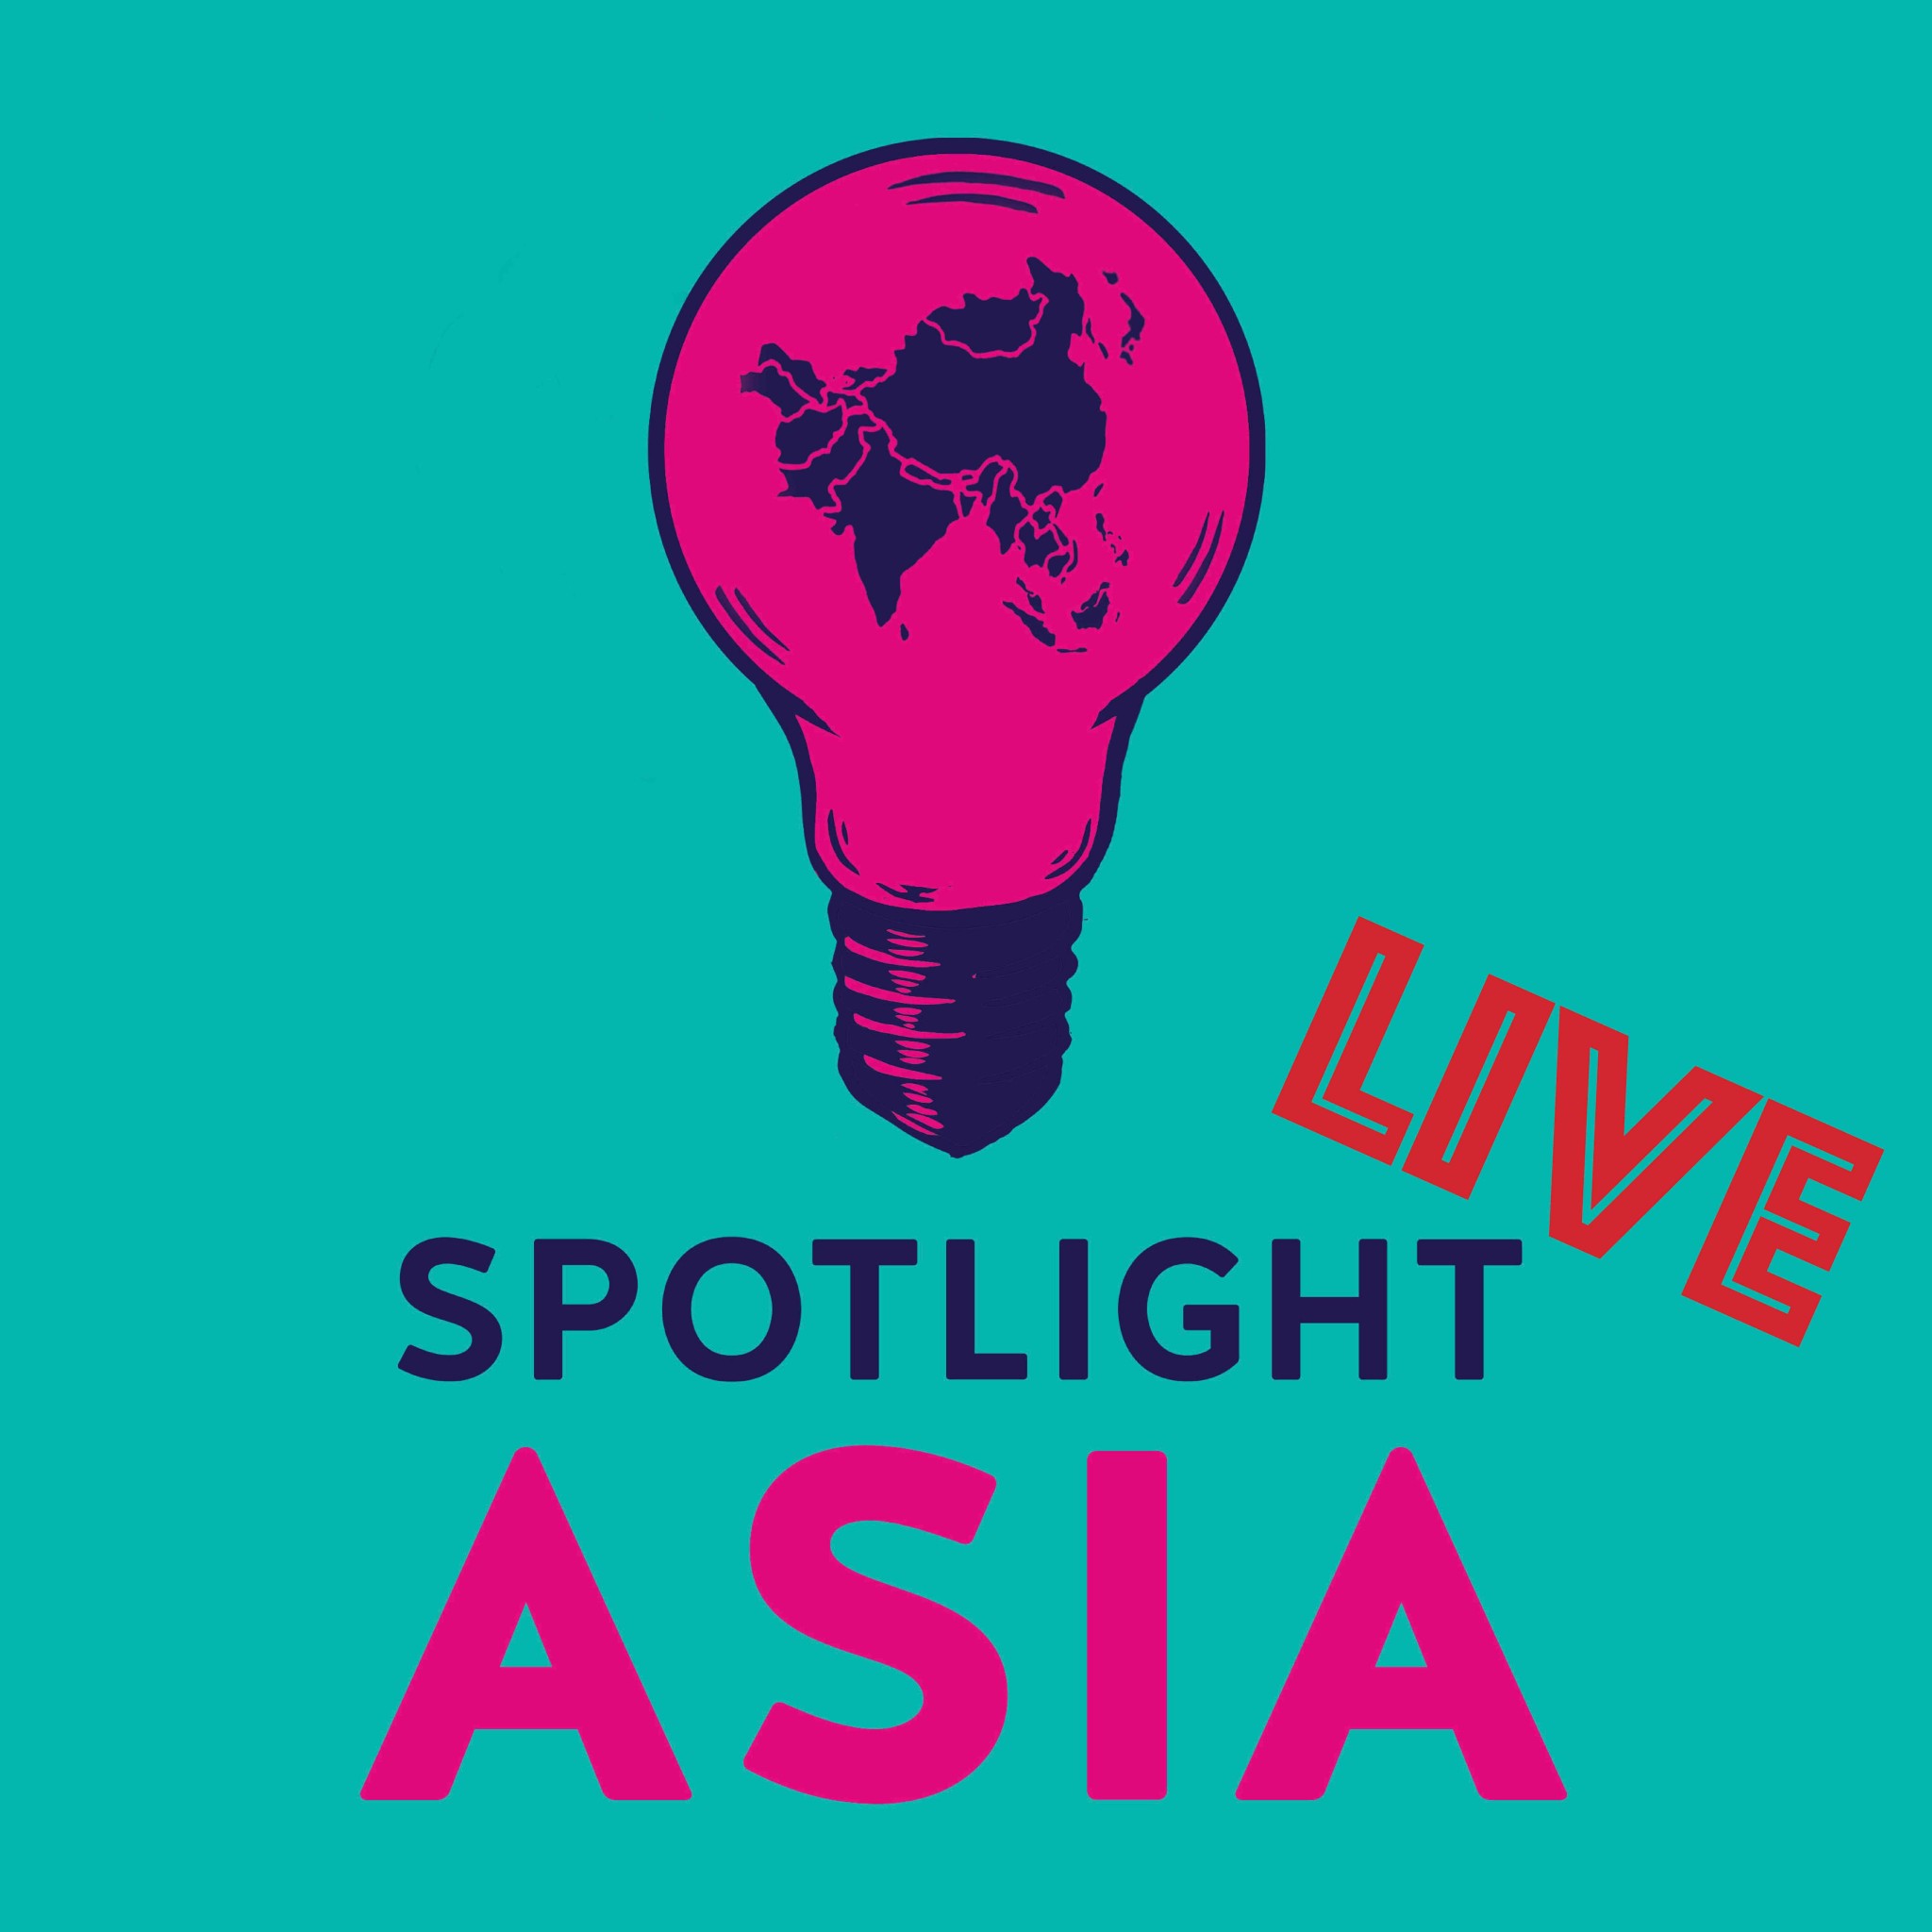 SpotlightAsia Live